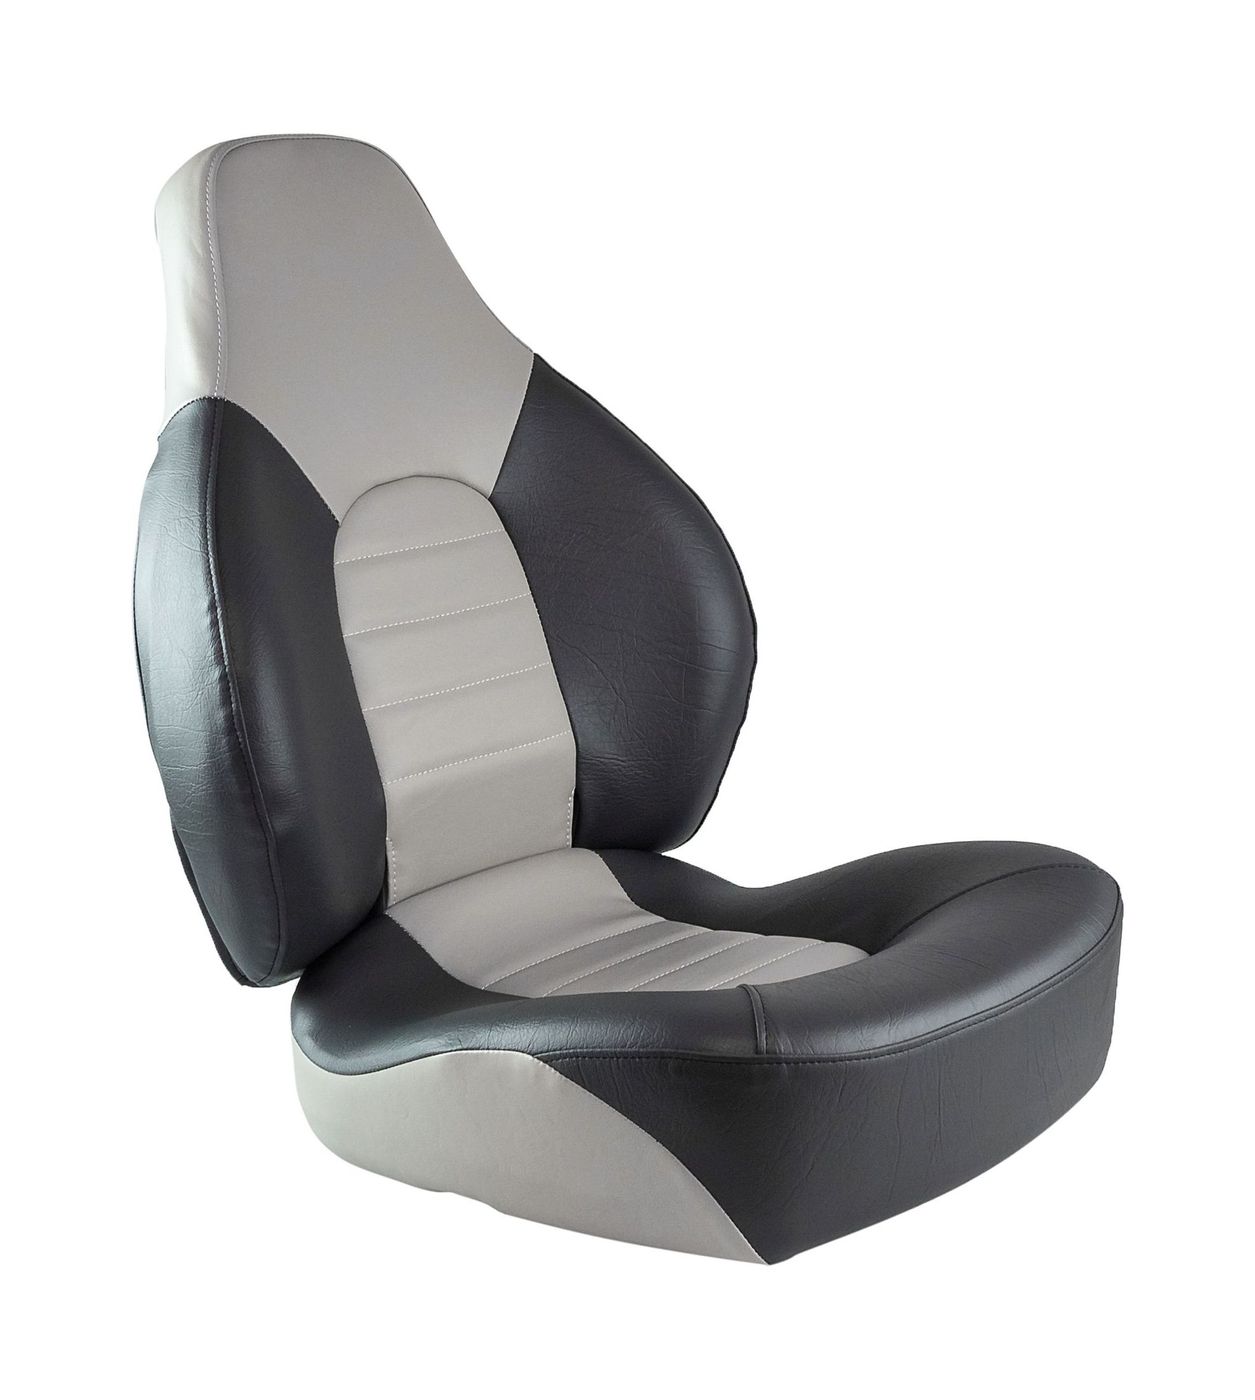 Кресло складное мягкое FISH PRO, серый/темно-серый 1041633 кресло складное premium серый темно серый 106202501